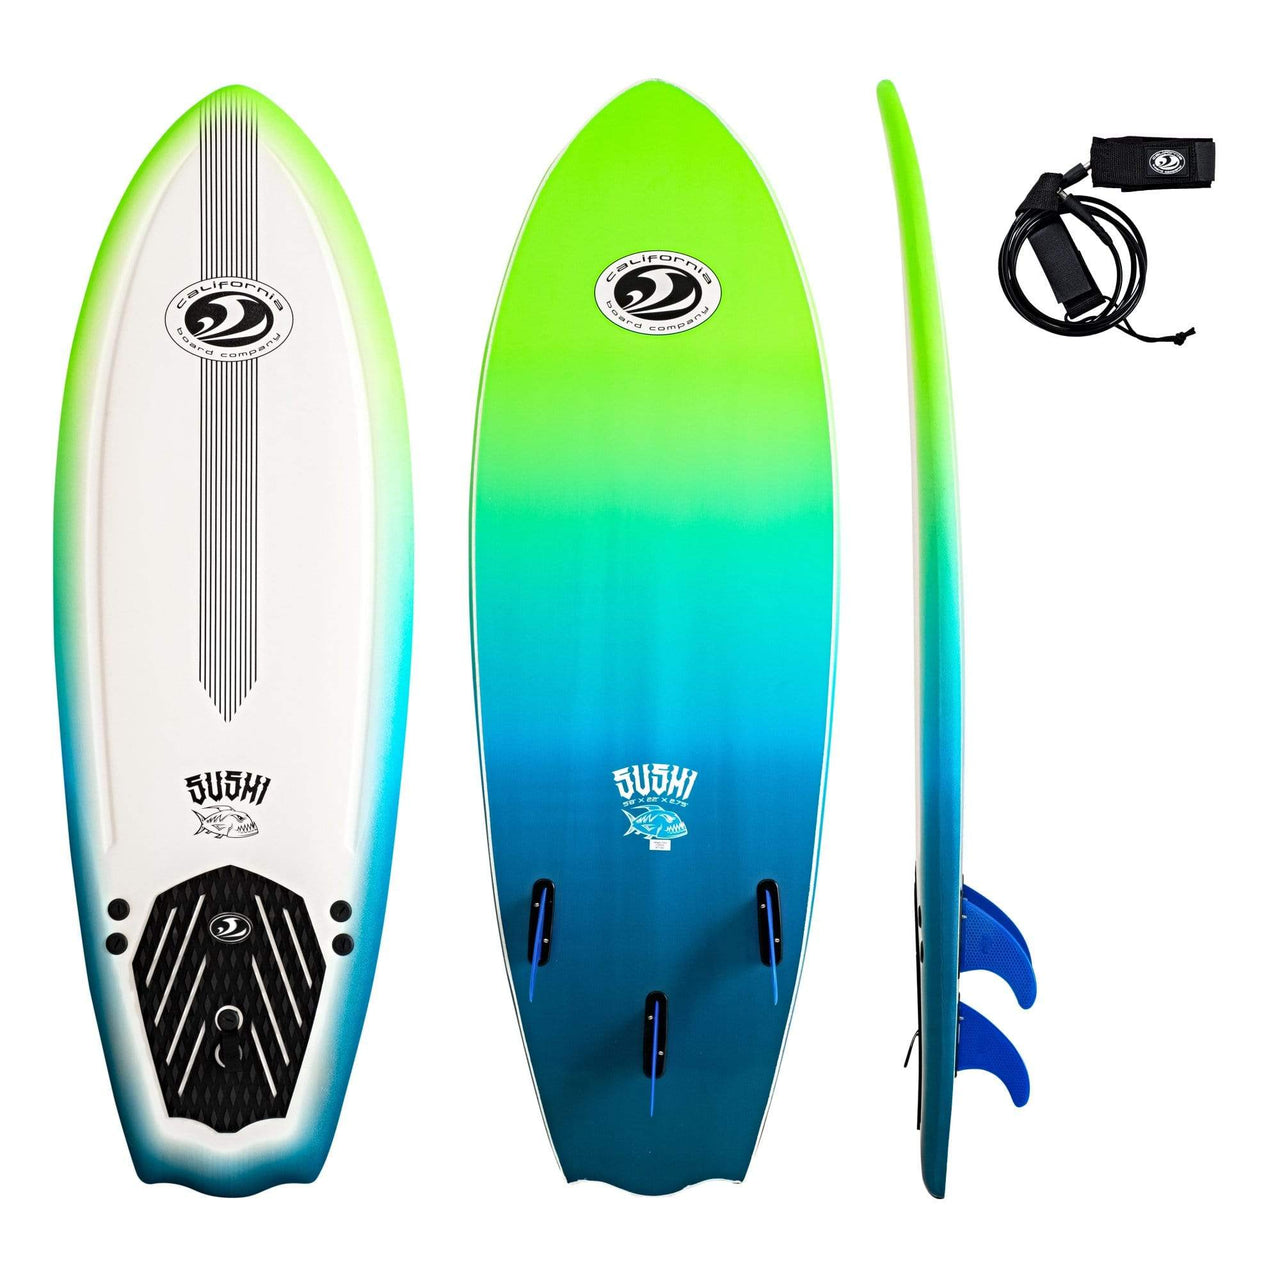 CBC 5'8" Sushi Foam Surfboard Soft Top - Good Wave